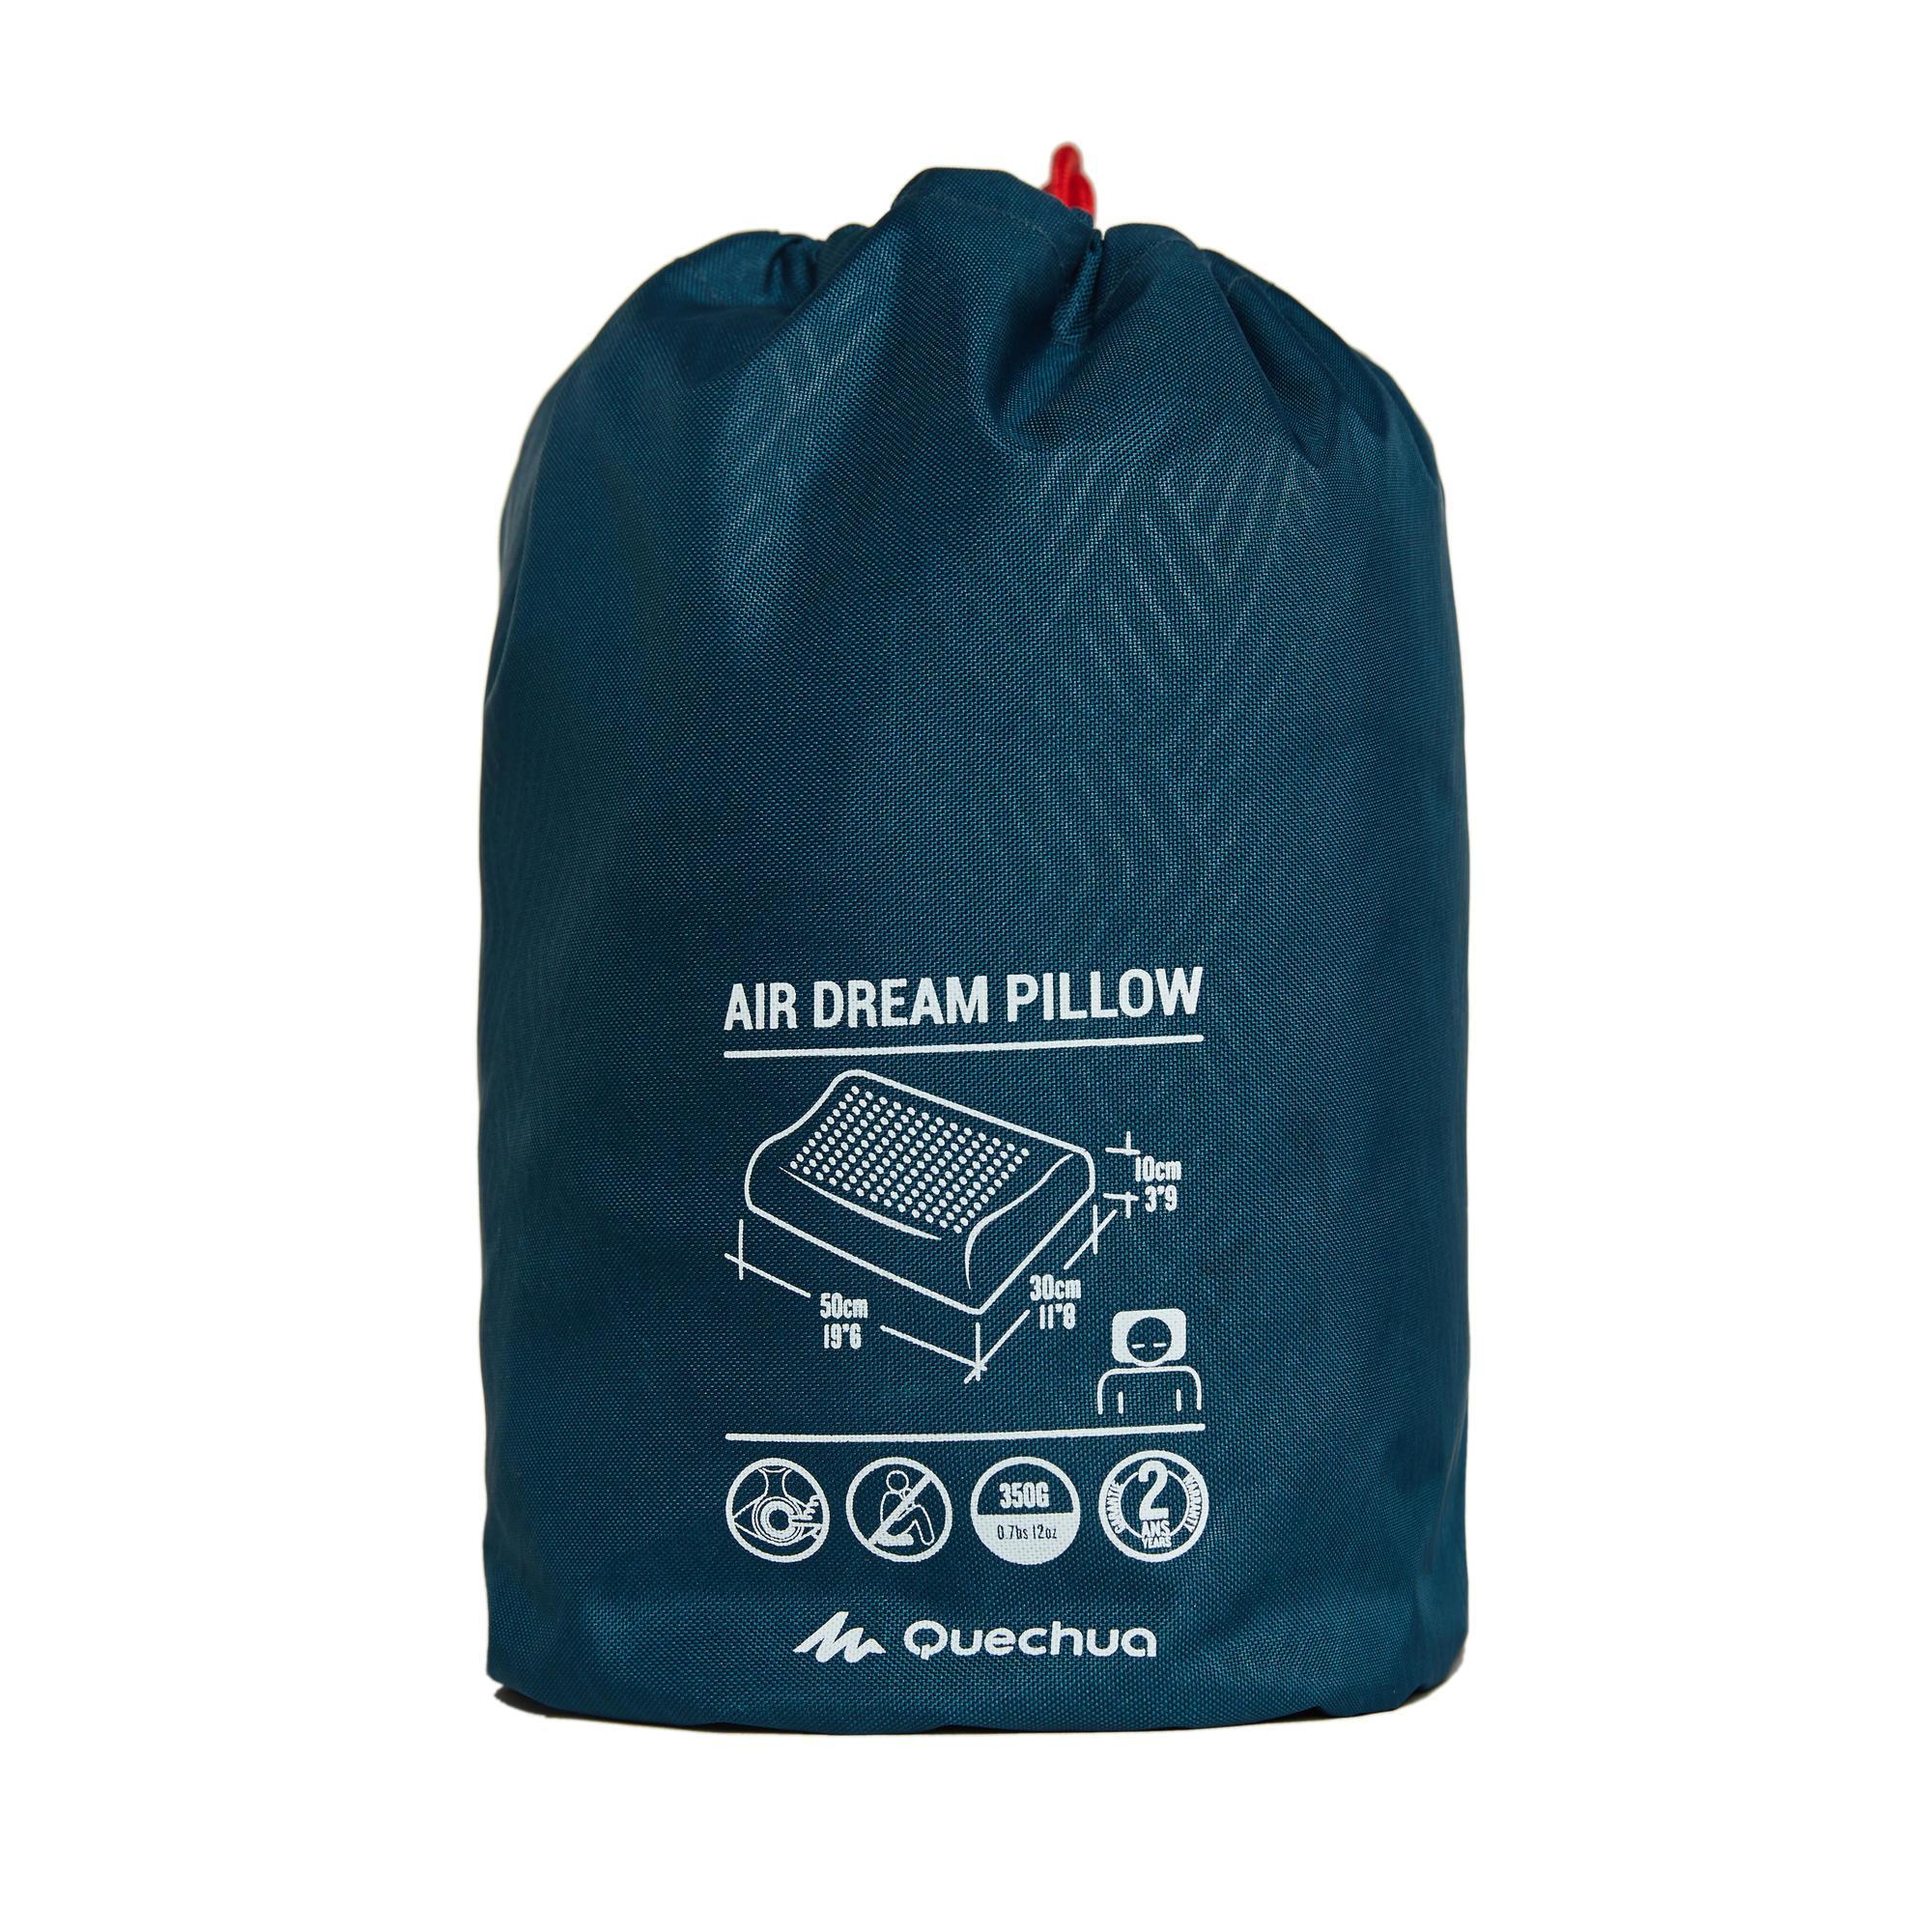 decathlon pillow air basic